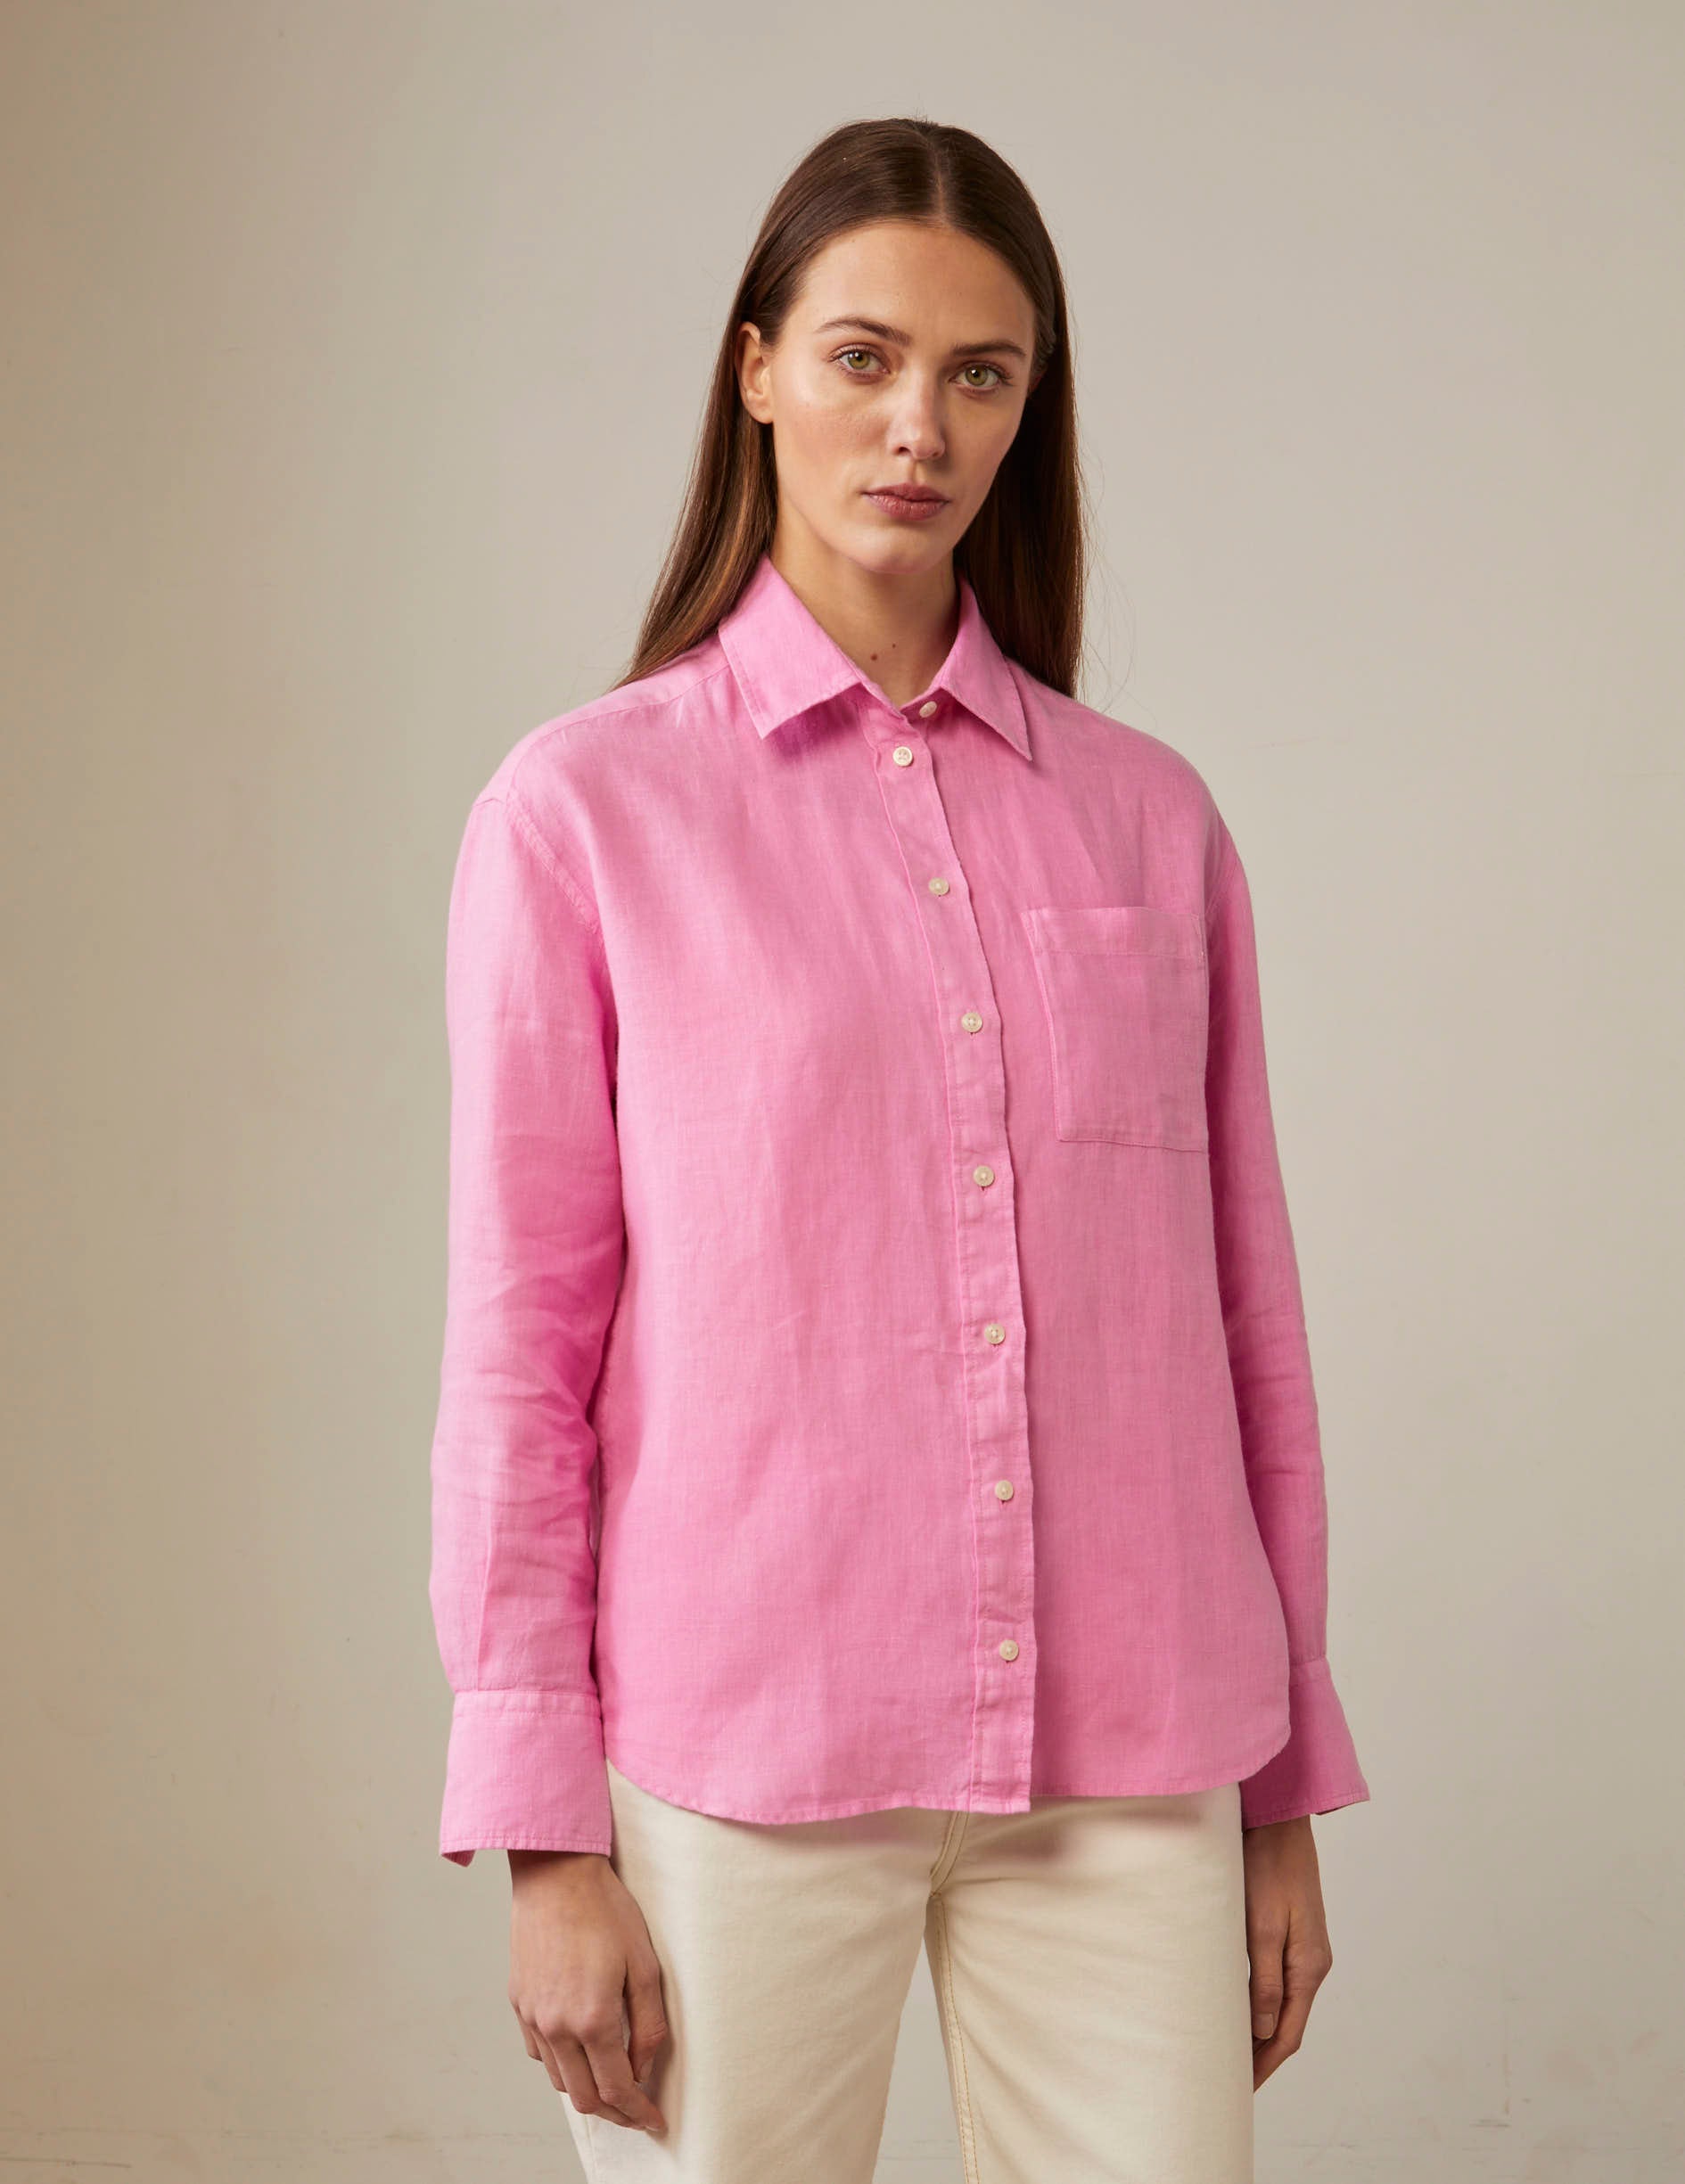 Charlotte shirt in pink linen